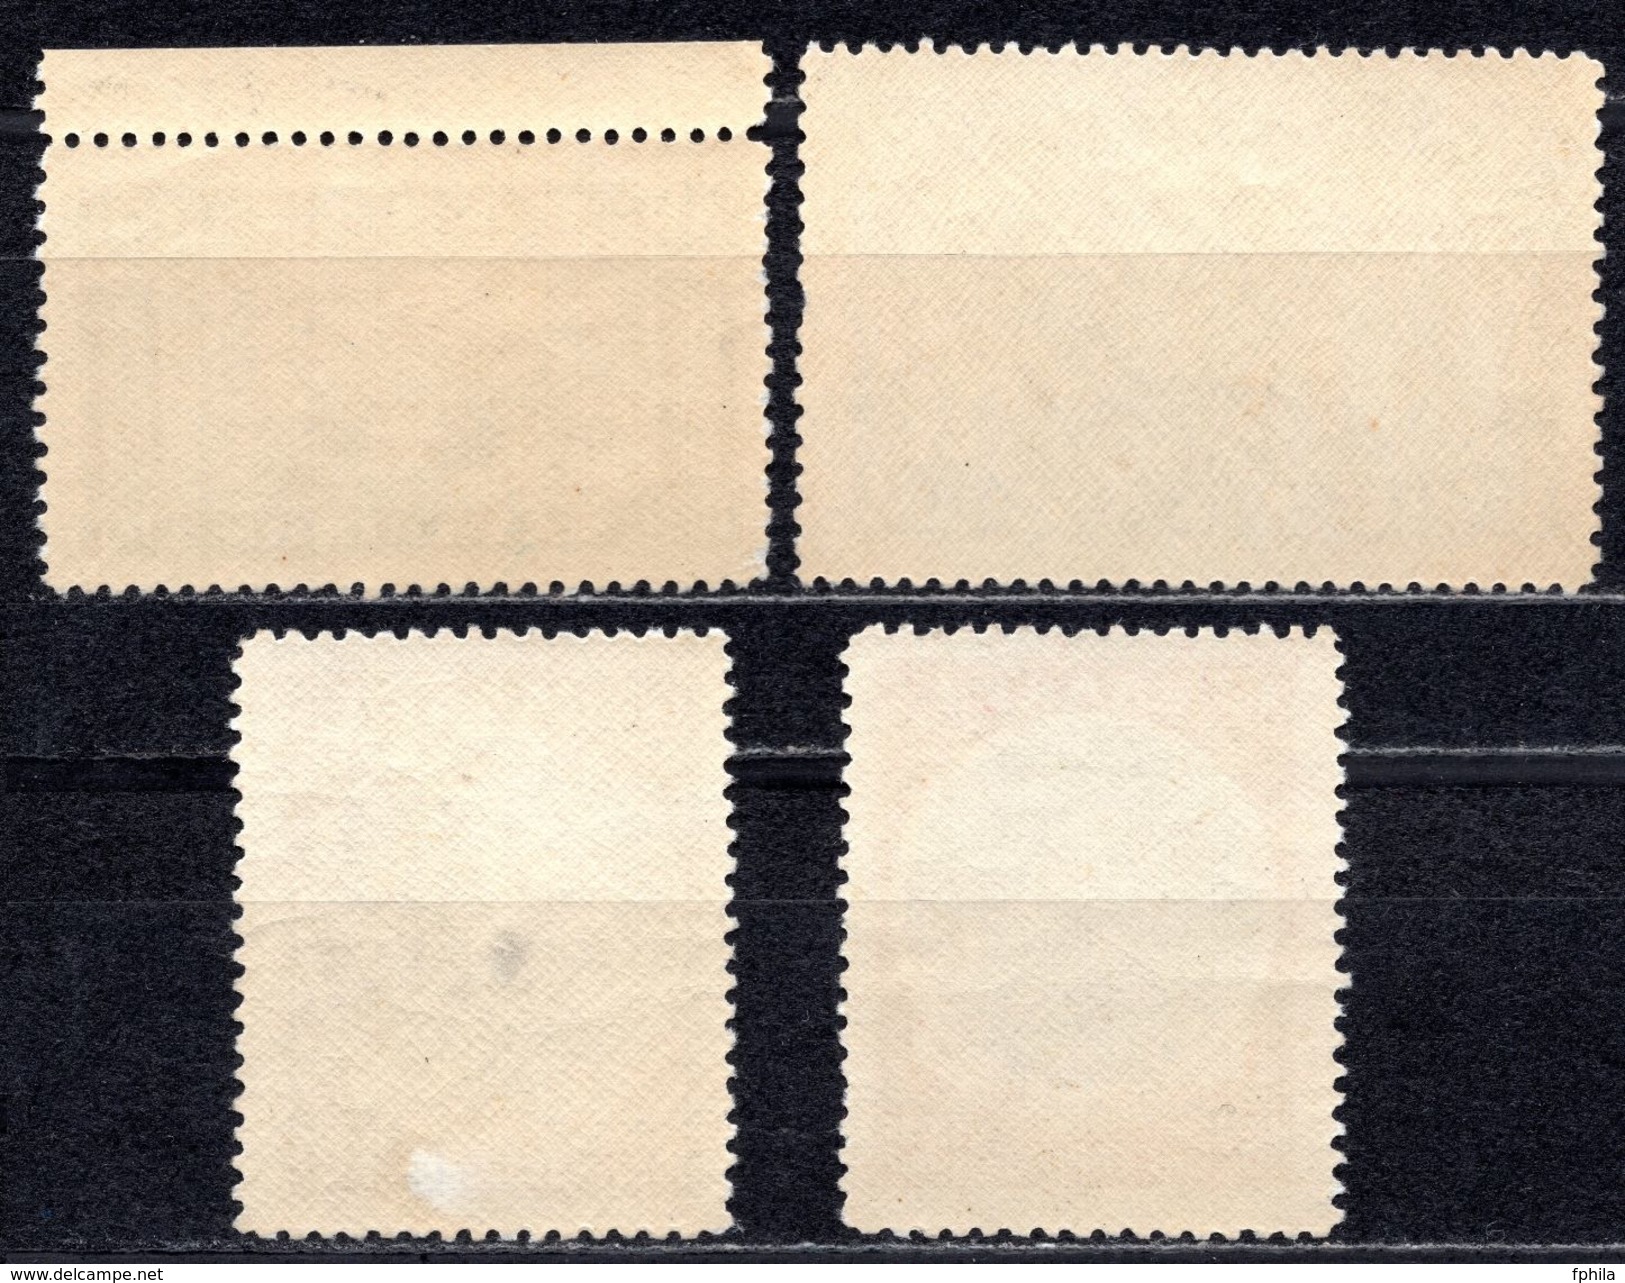 1927 GREECE BATTLE OF NAVARINO MICHEL: 321-322, 324-325 MNH ** - Unused Stamps